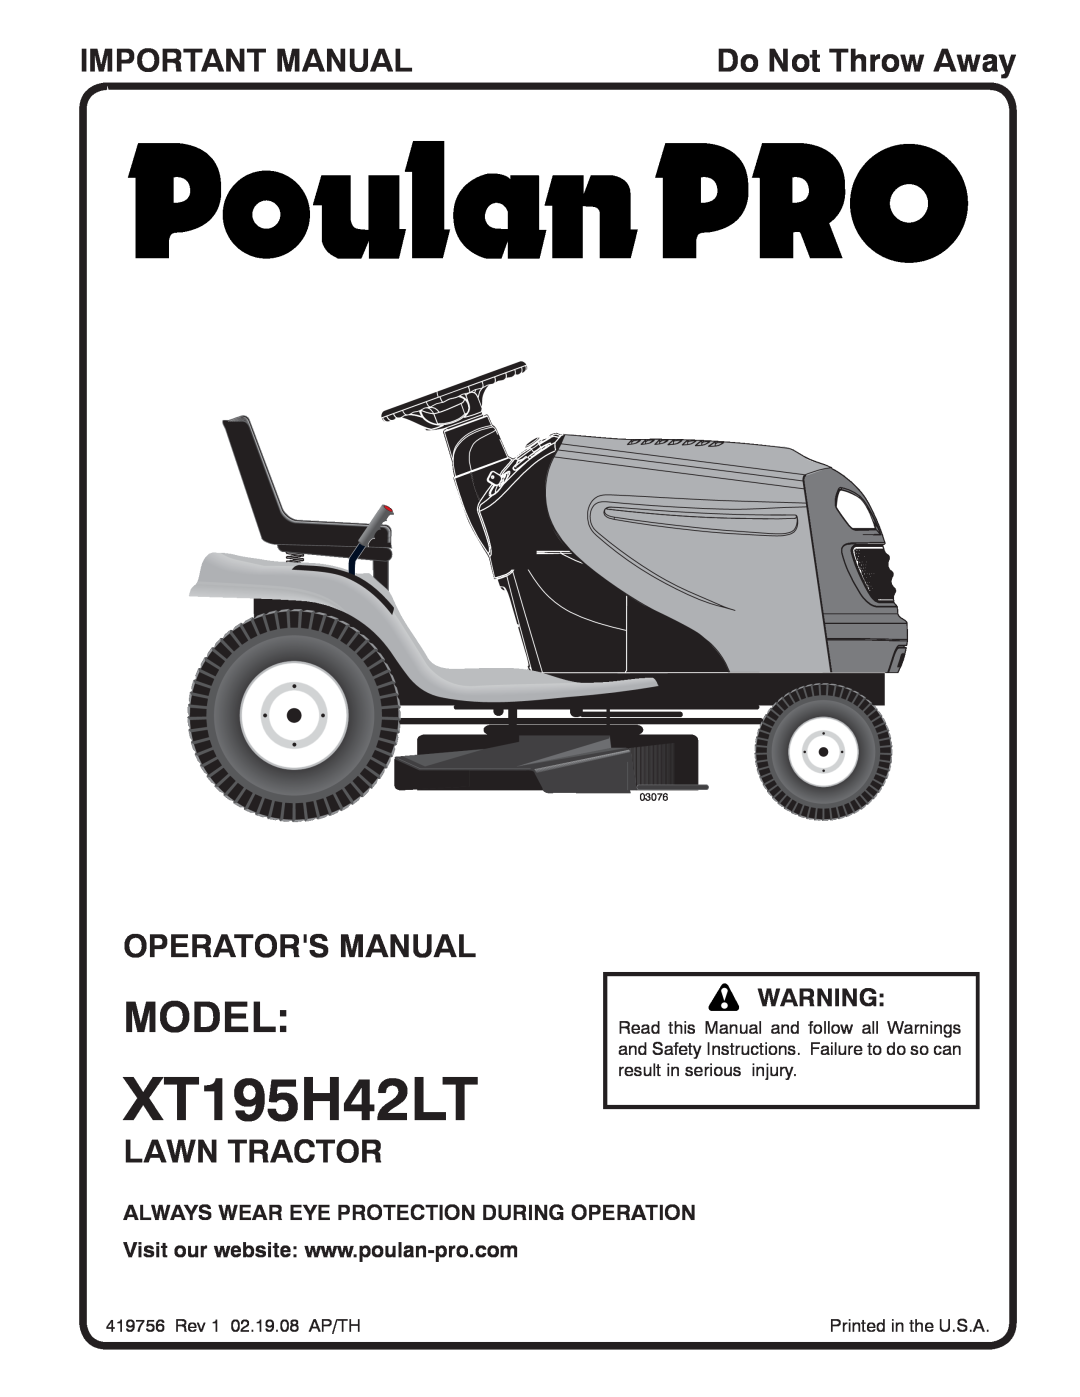 Poulan 419756 manual Model, Important Manual, Operators Manual, Lawn Tractor, Do Not Throw Away, XT195H42LT, 03076 